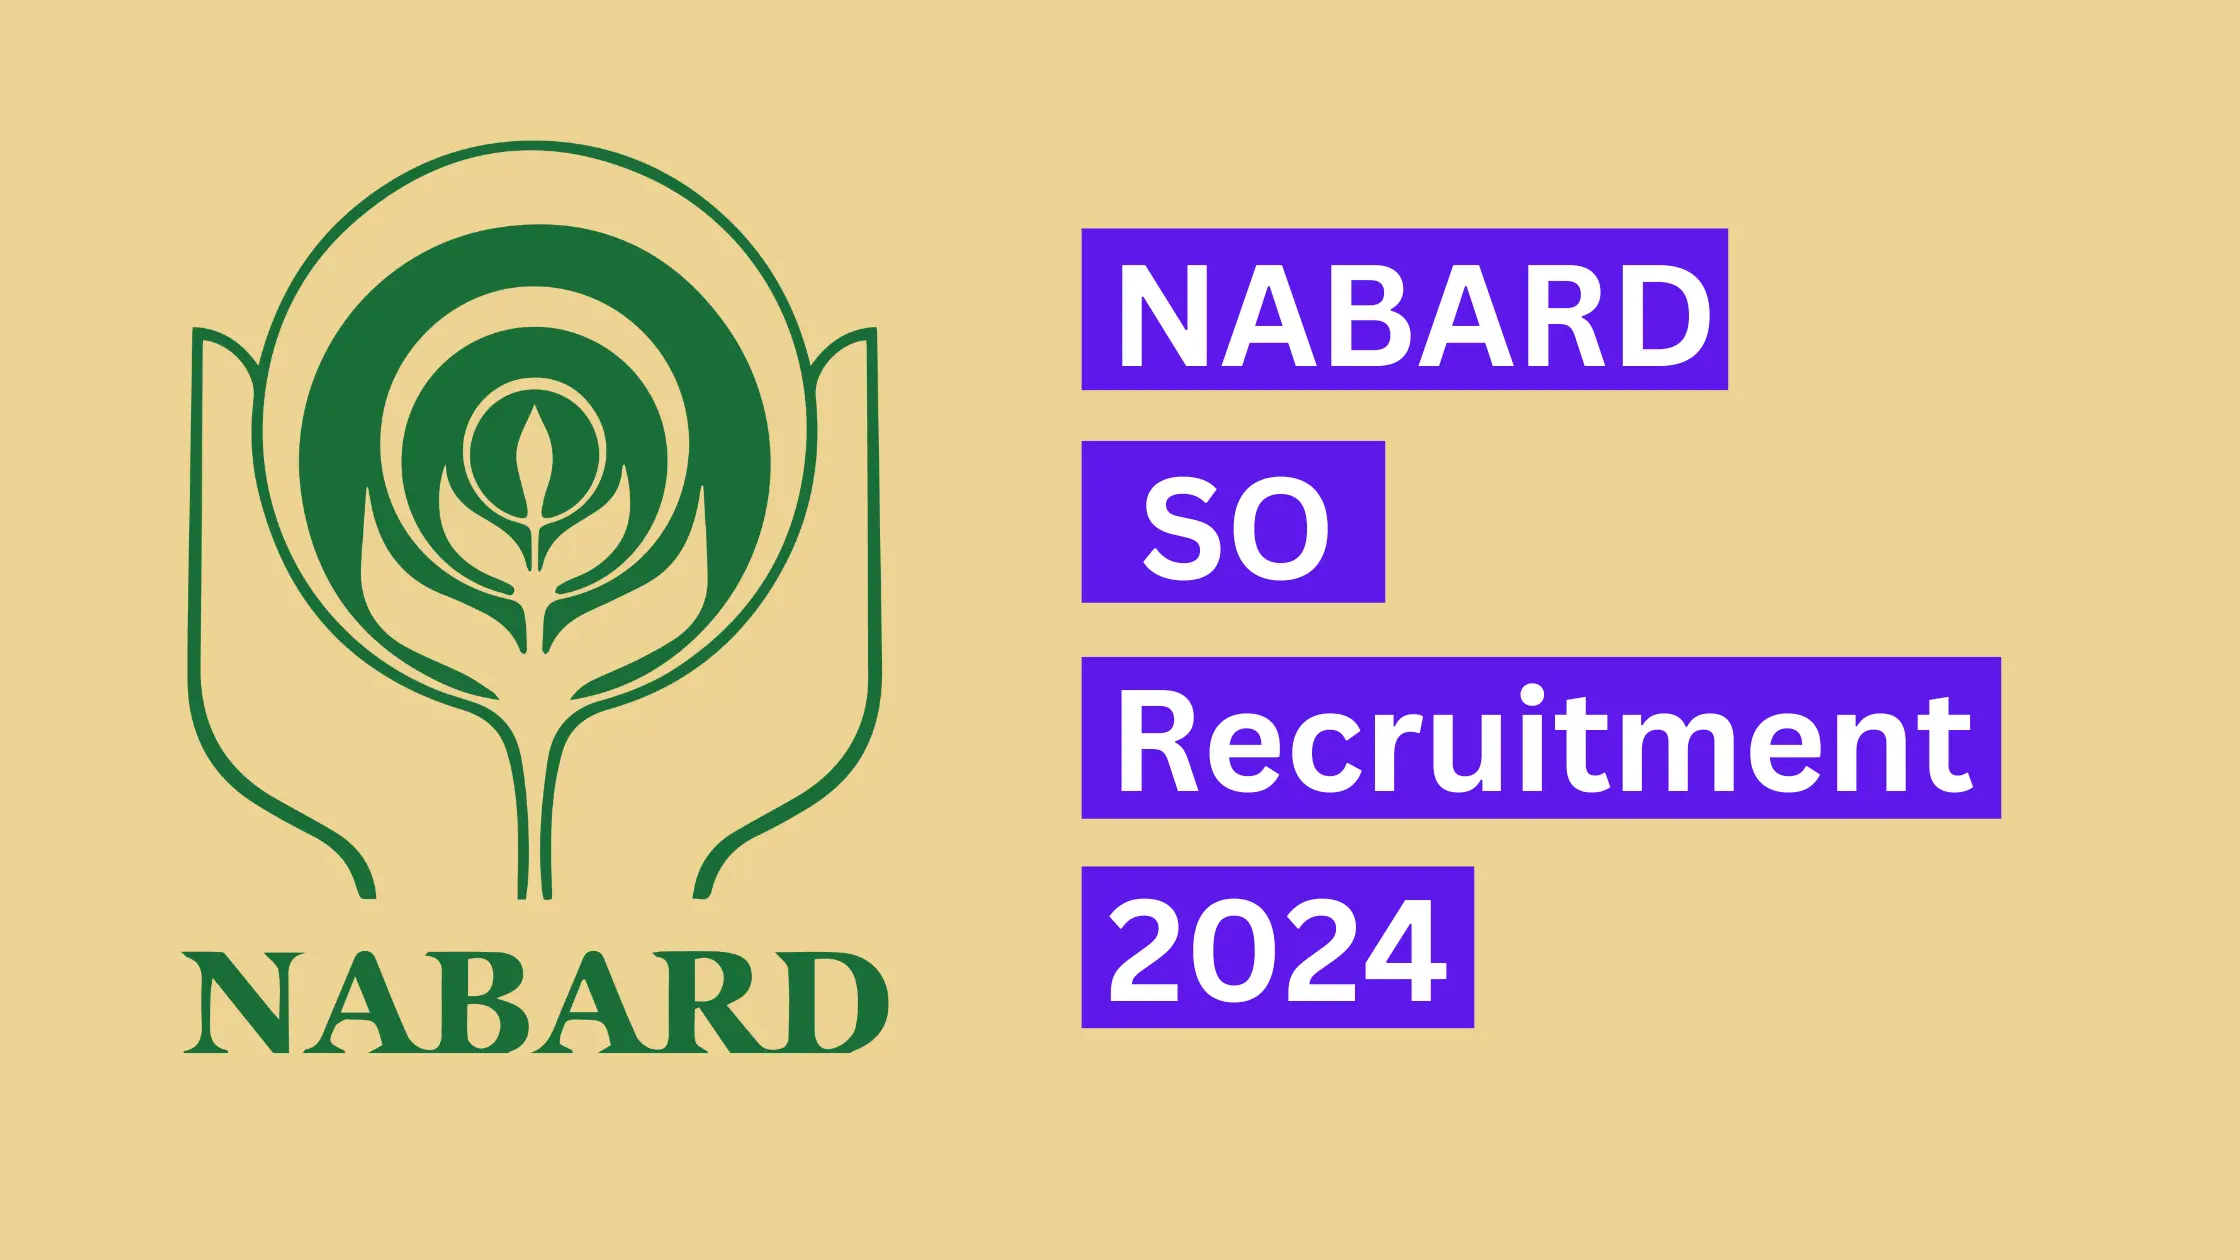 NABARD SO Recruitment 2024